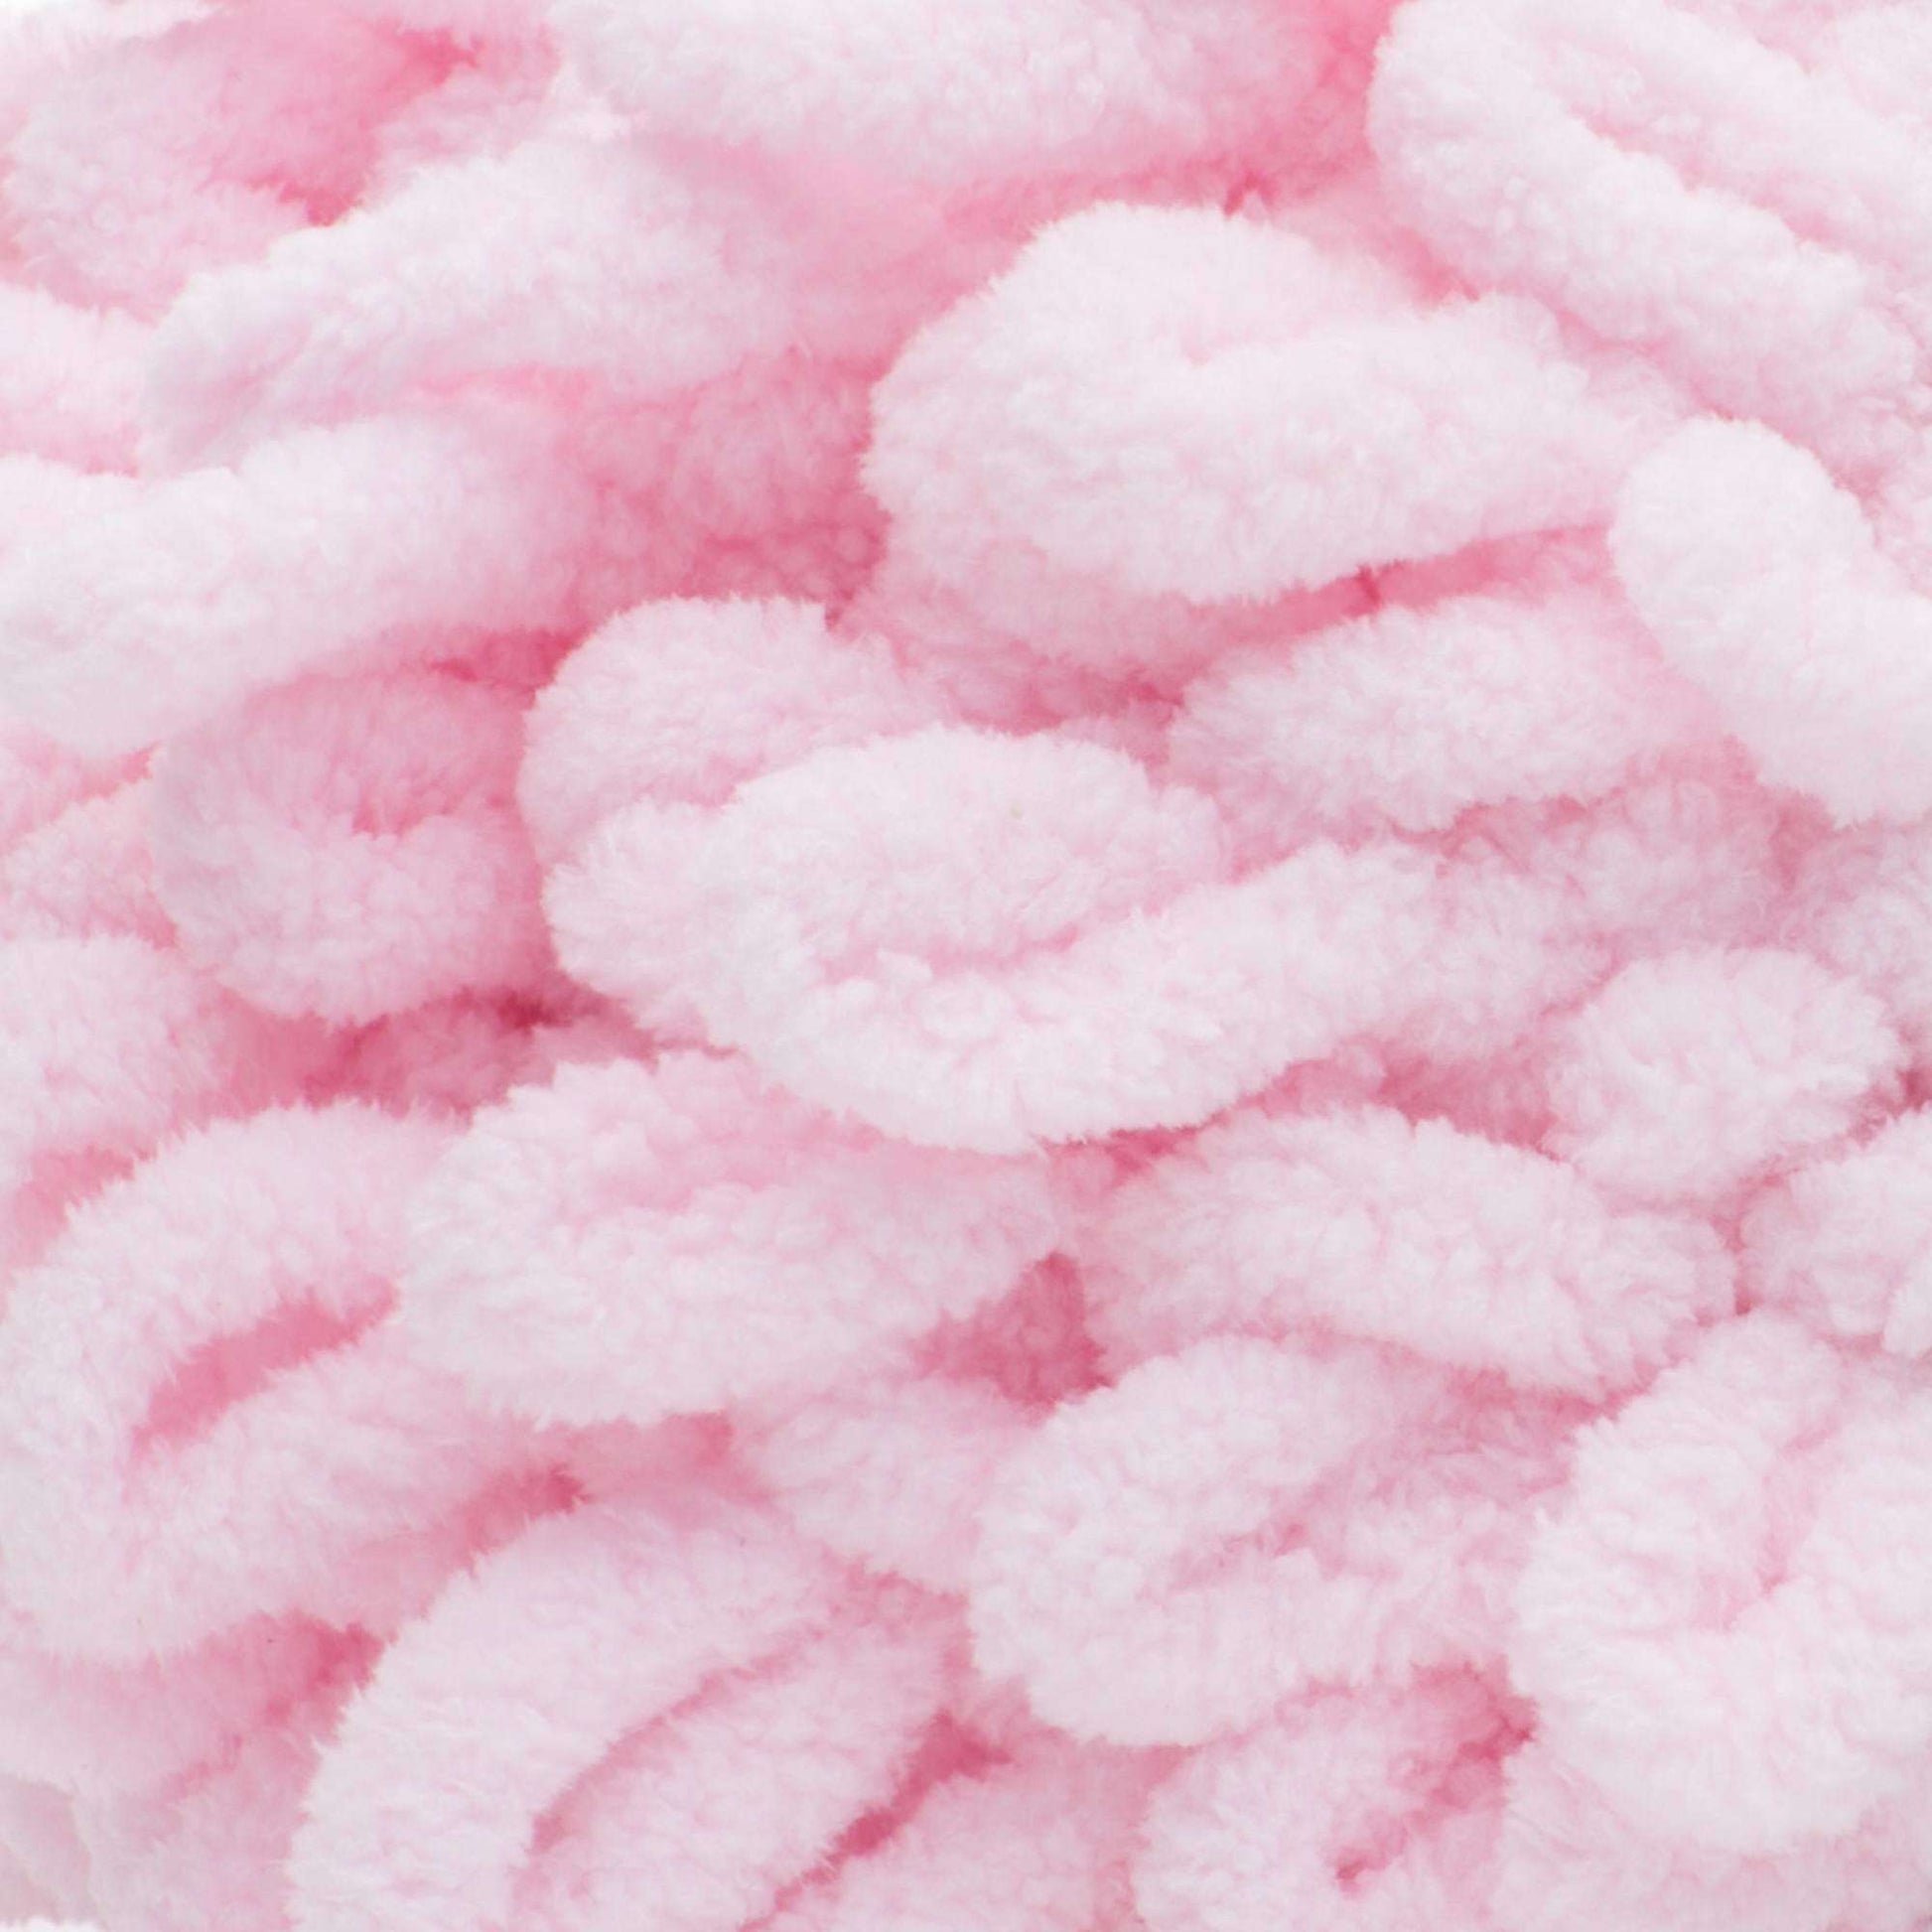 Bernat Alize Blanket-EZ Yarn Powder Pink